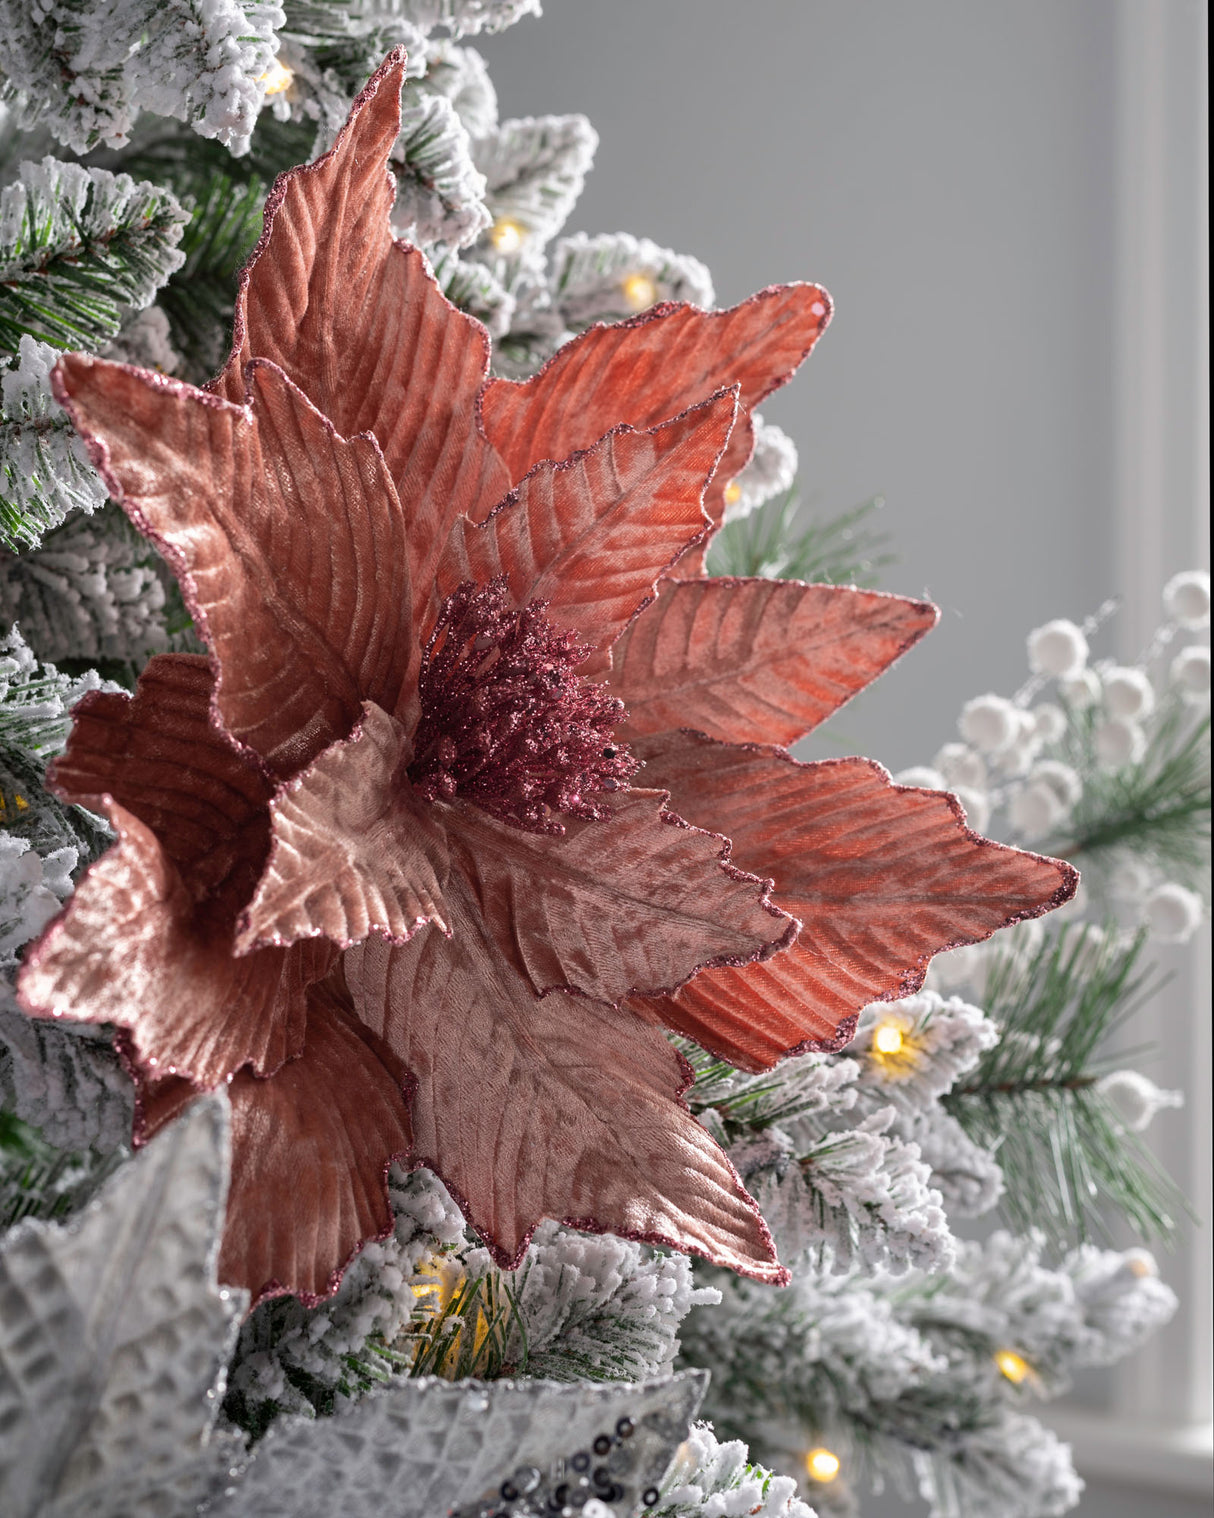 Artificial Poinsettia Flower, Pink, 32 cm